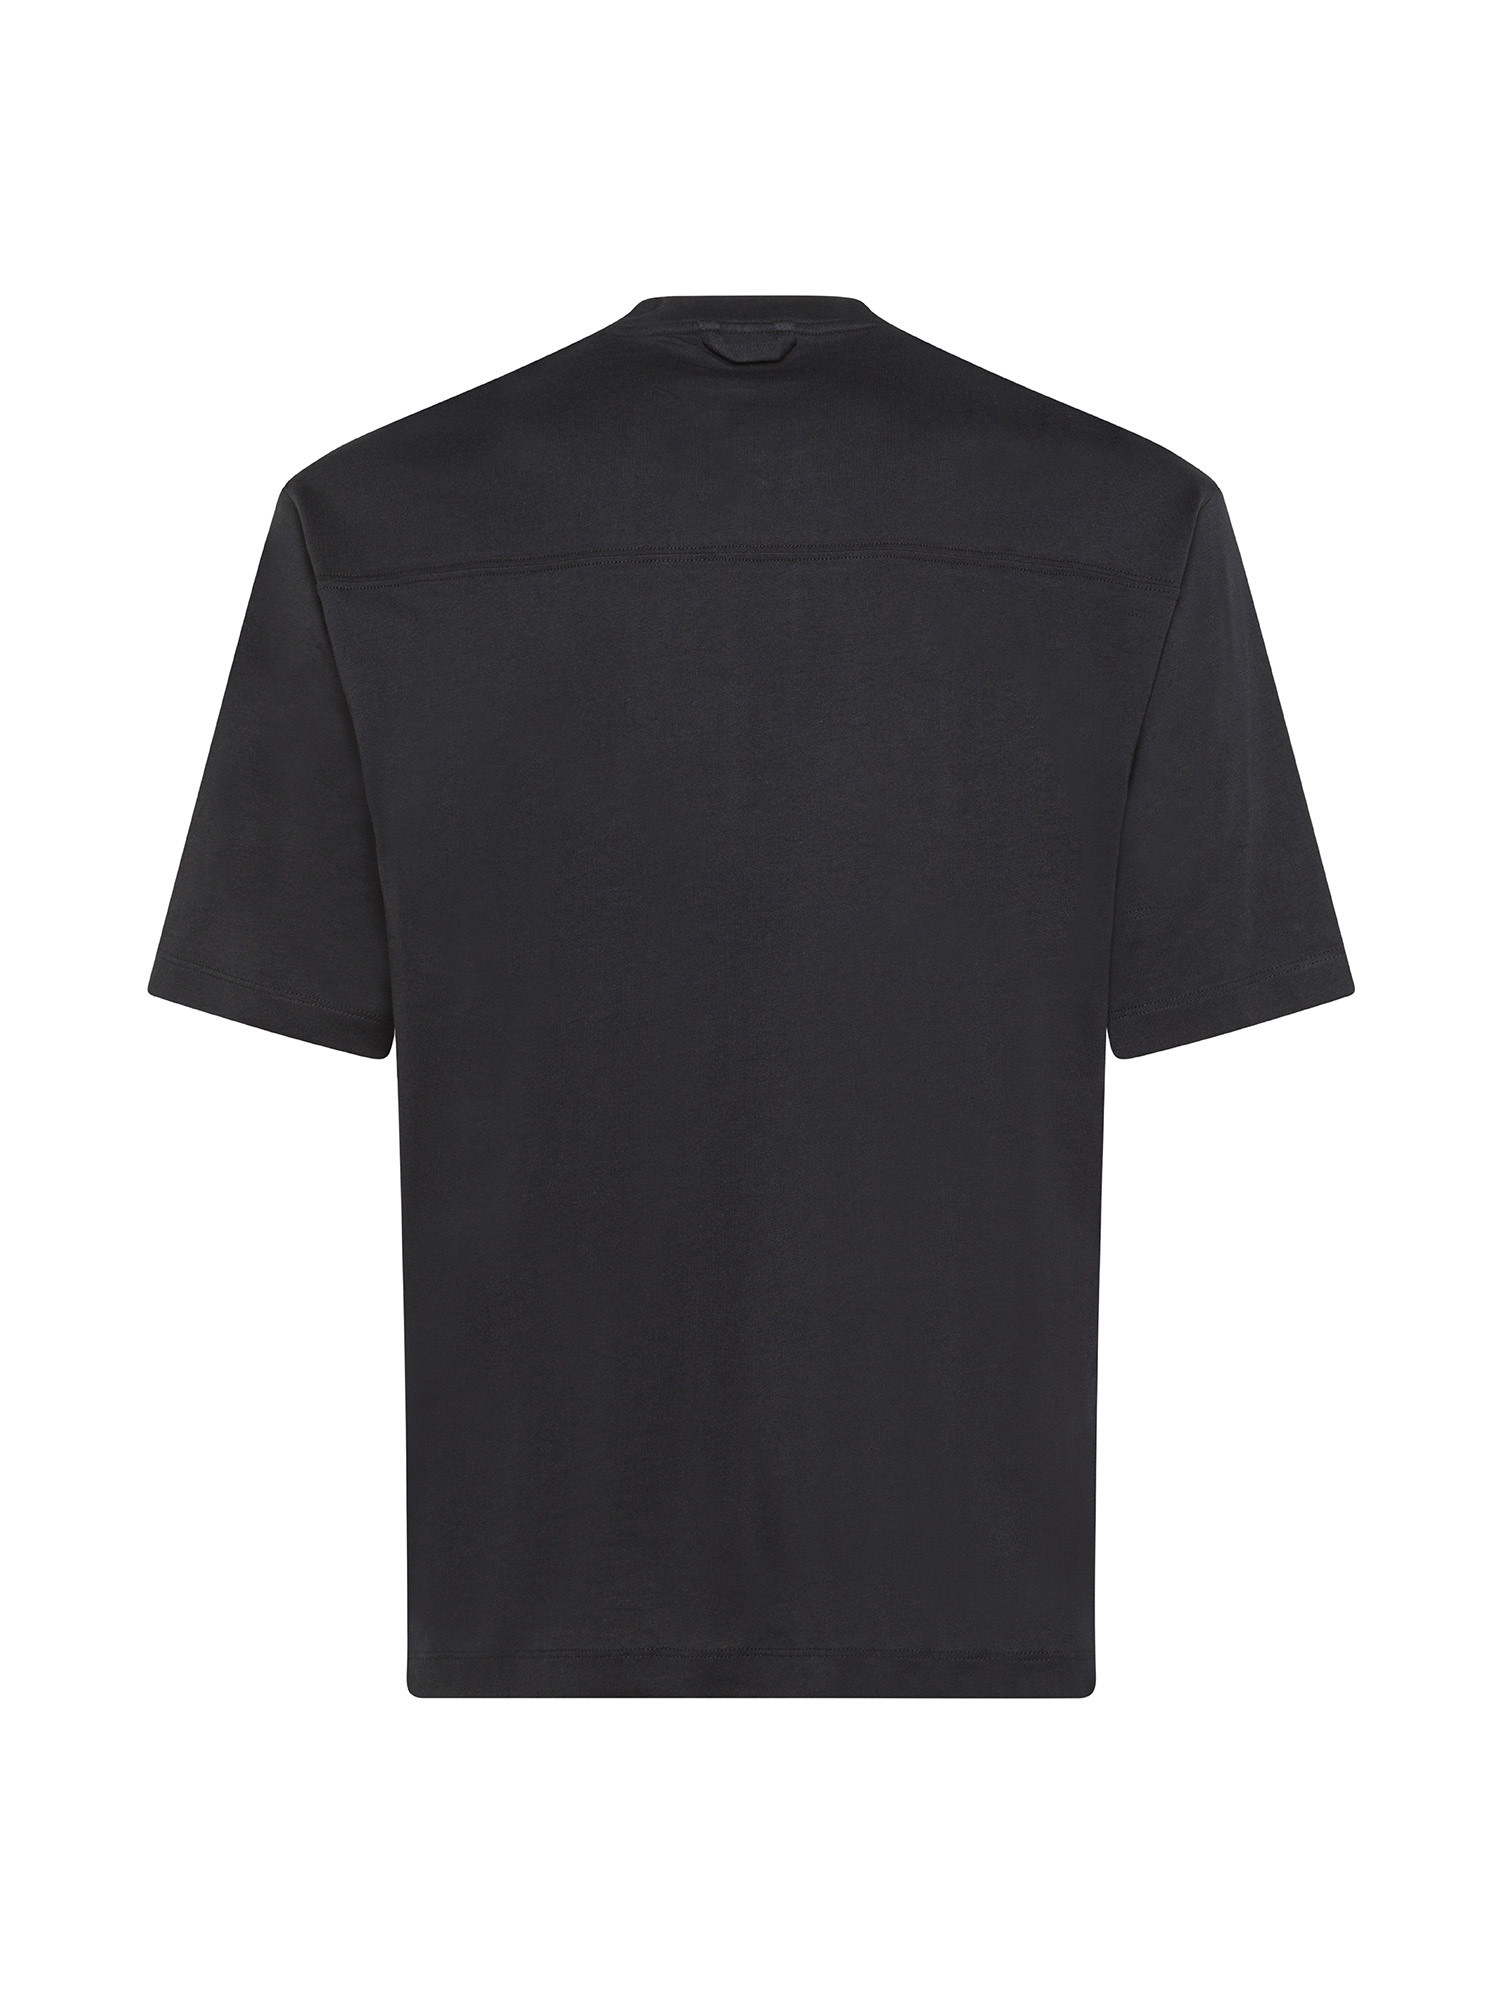 Armani Exchange - T-shirt girocollo in cotone, Nero, large image number 1